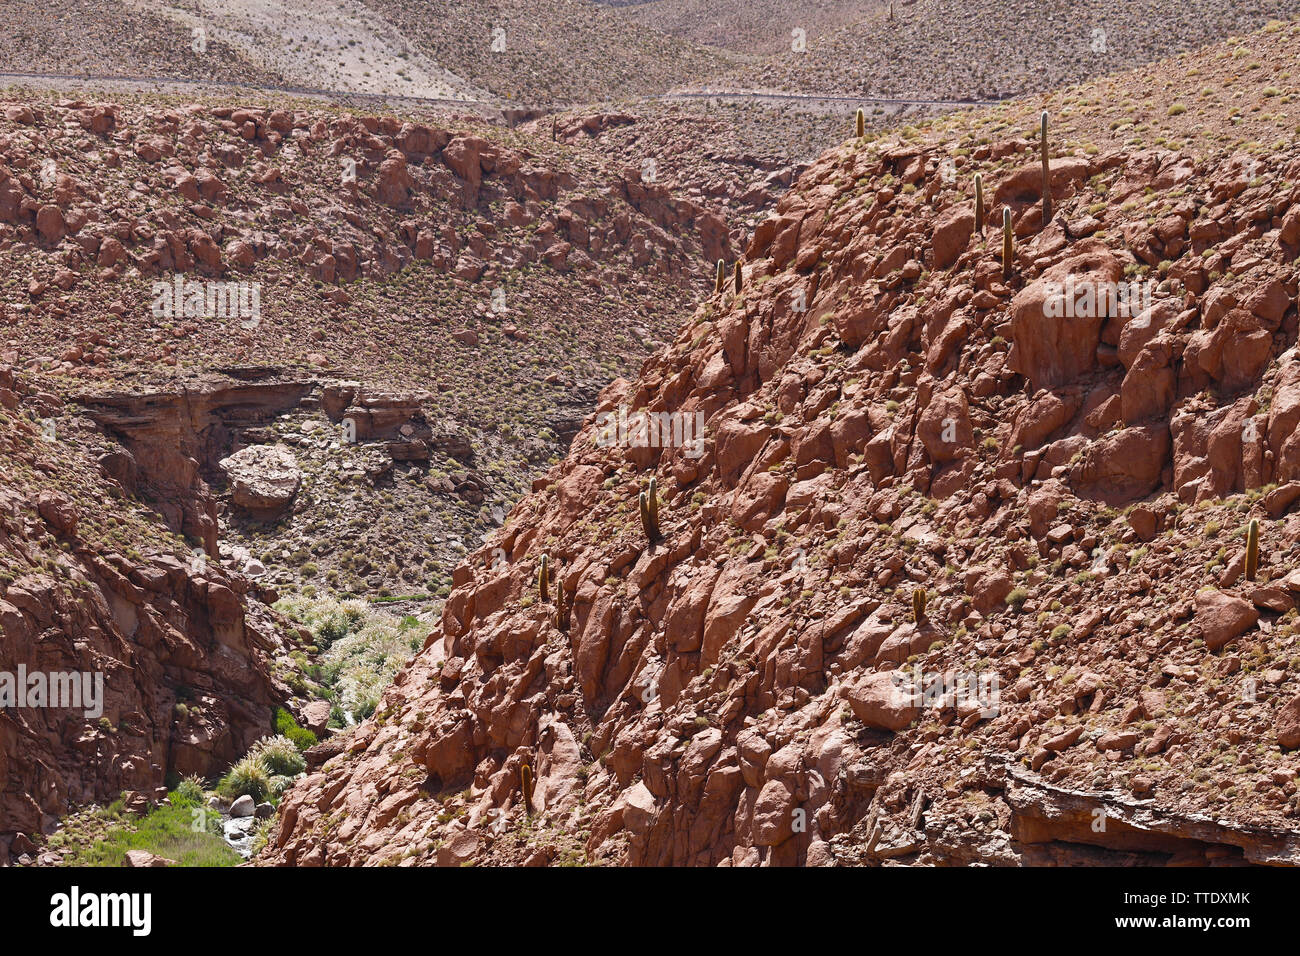 Landscapes of the Atacama Desert: canyon and volcanoes along the road to the El Tatio geysers near the Termas de Puritama, Atacama Desert, Chile Stock Photo